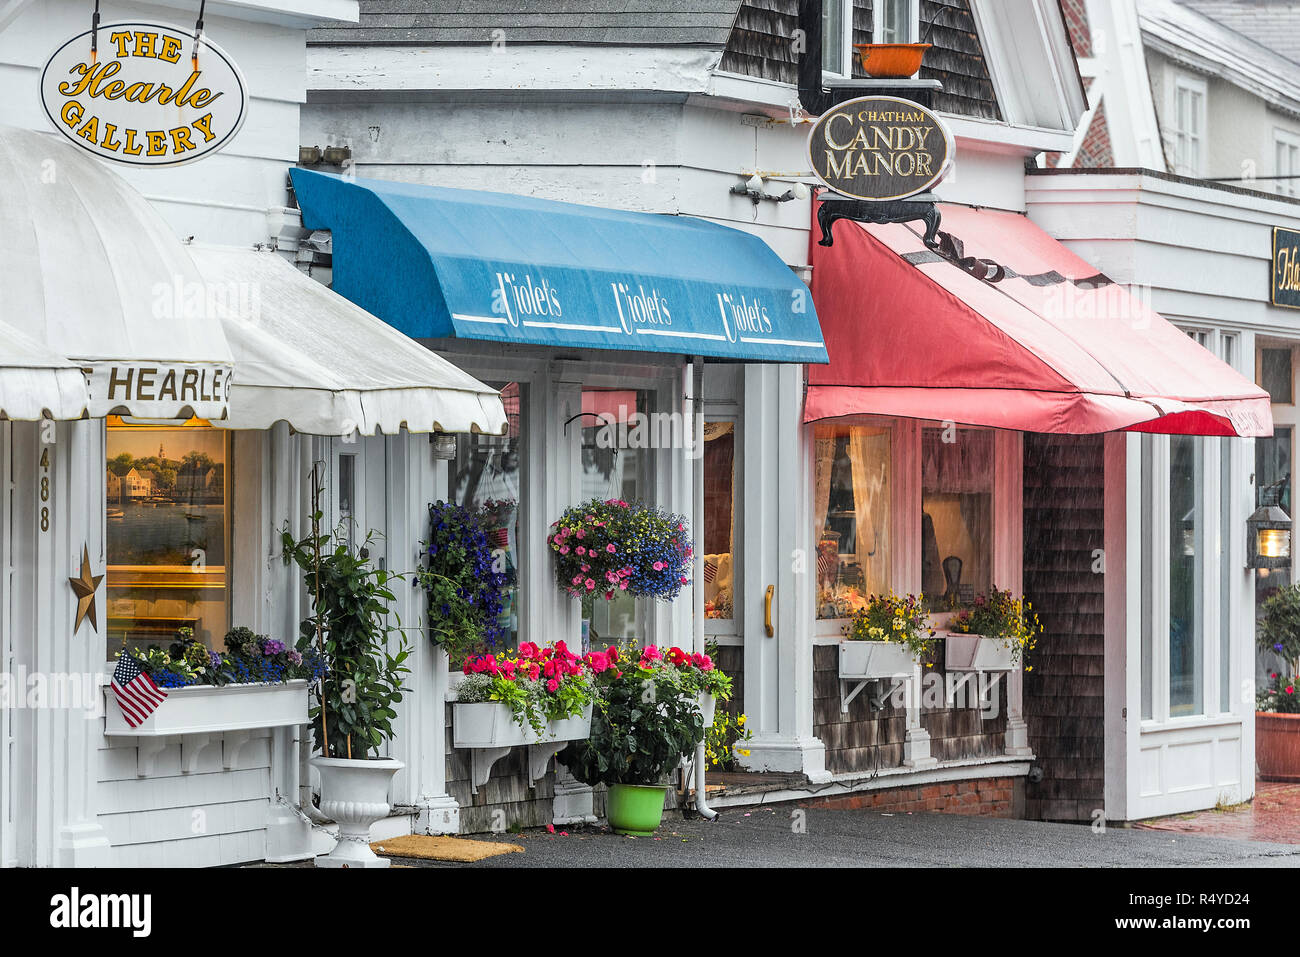 Las encantadoras tiendas de la calle Main Street, Chatham, en Cape Cod, Massachusetts, EE.UU. Foto de stock